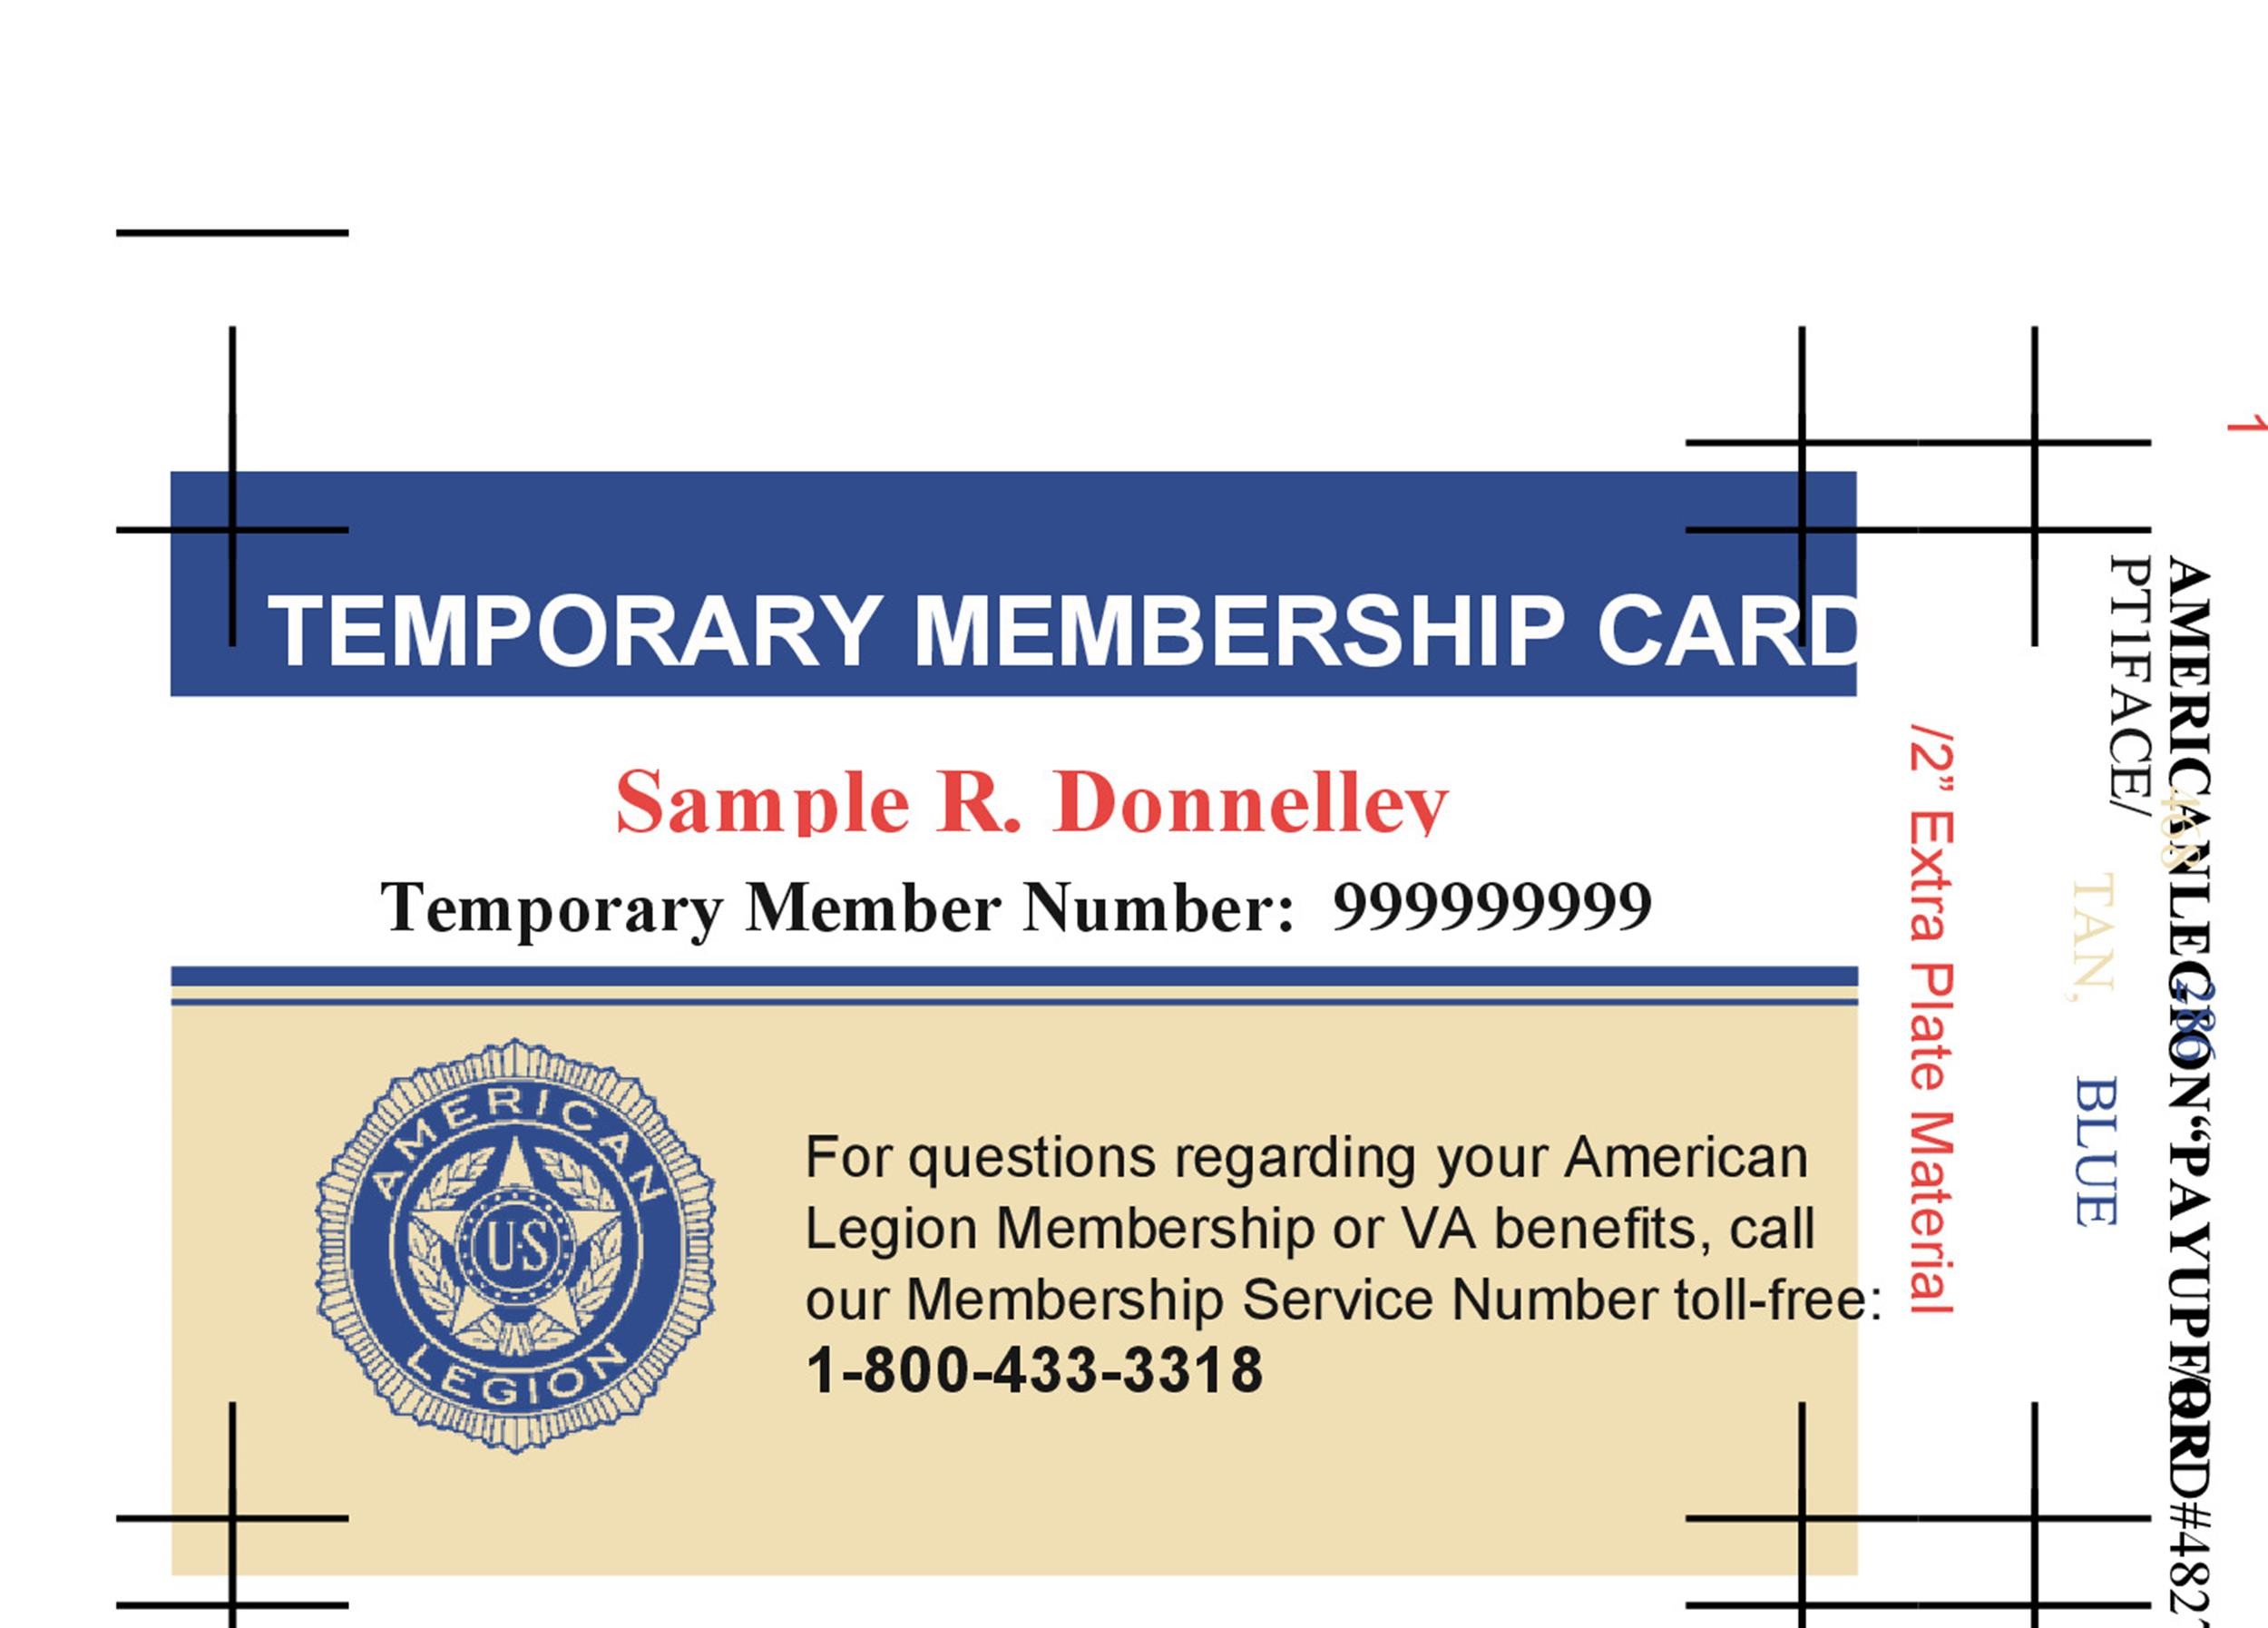 25 Cool Membership Card Templates & Designs (MS Word) ᐅ TemplateLab